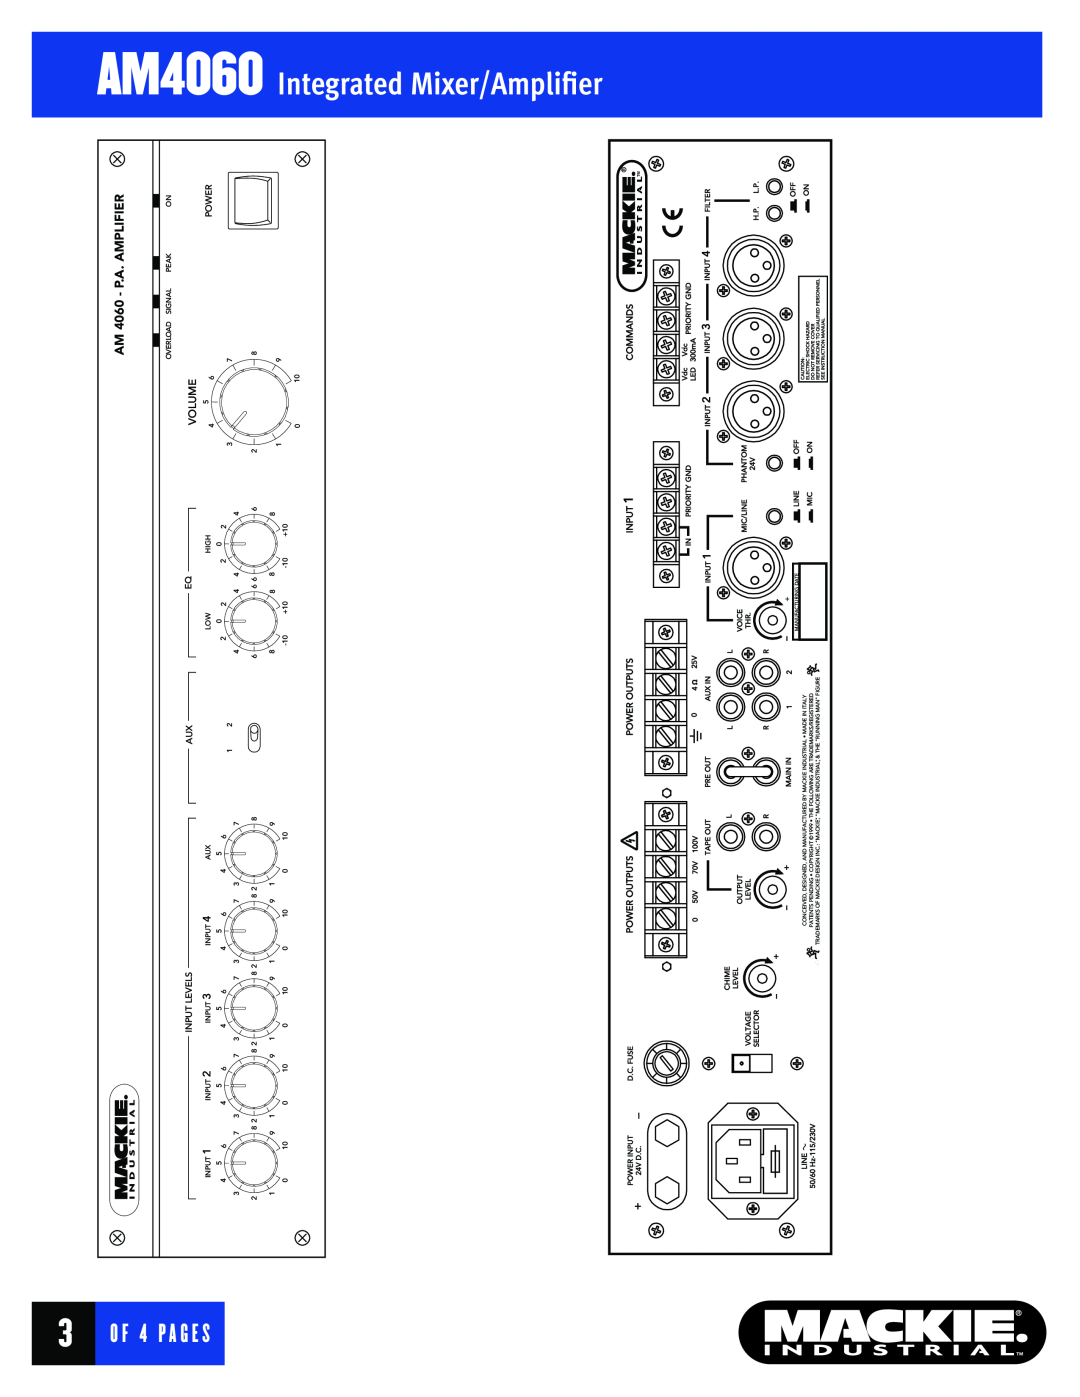 Mackie warranty O F 4 P, A G E S, AM4060 Integrated Mixer/Ampliﬁer, AM 4060 - P.A. AMPLIFIER, Volume, Input Levels 